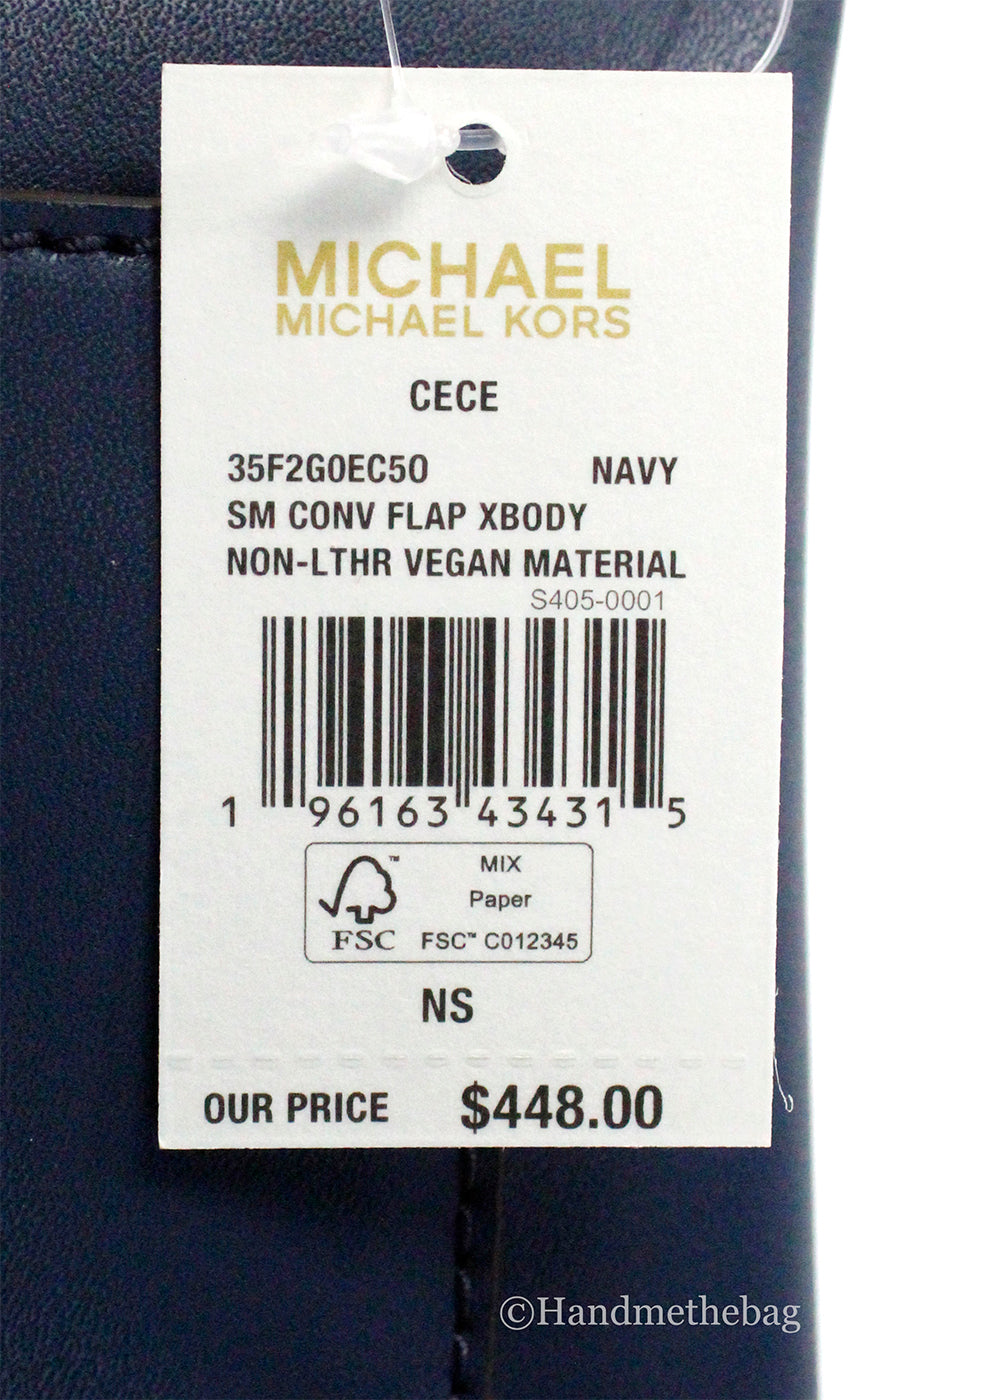 Michael Kors Cece Small Navy Vegan Convertible Flap Crossbody